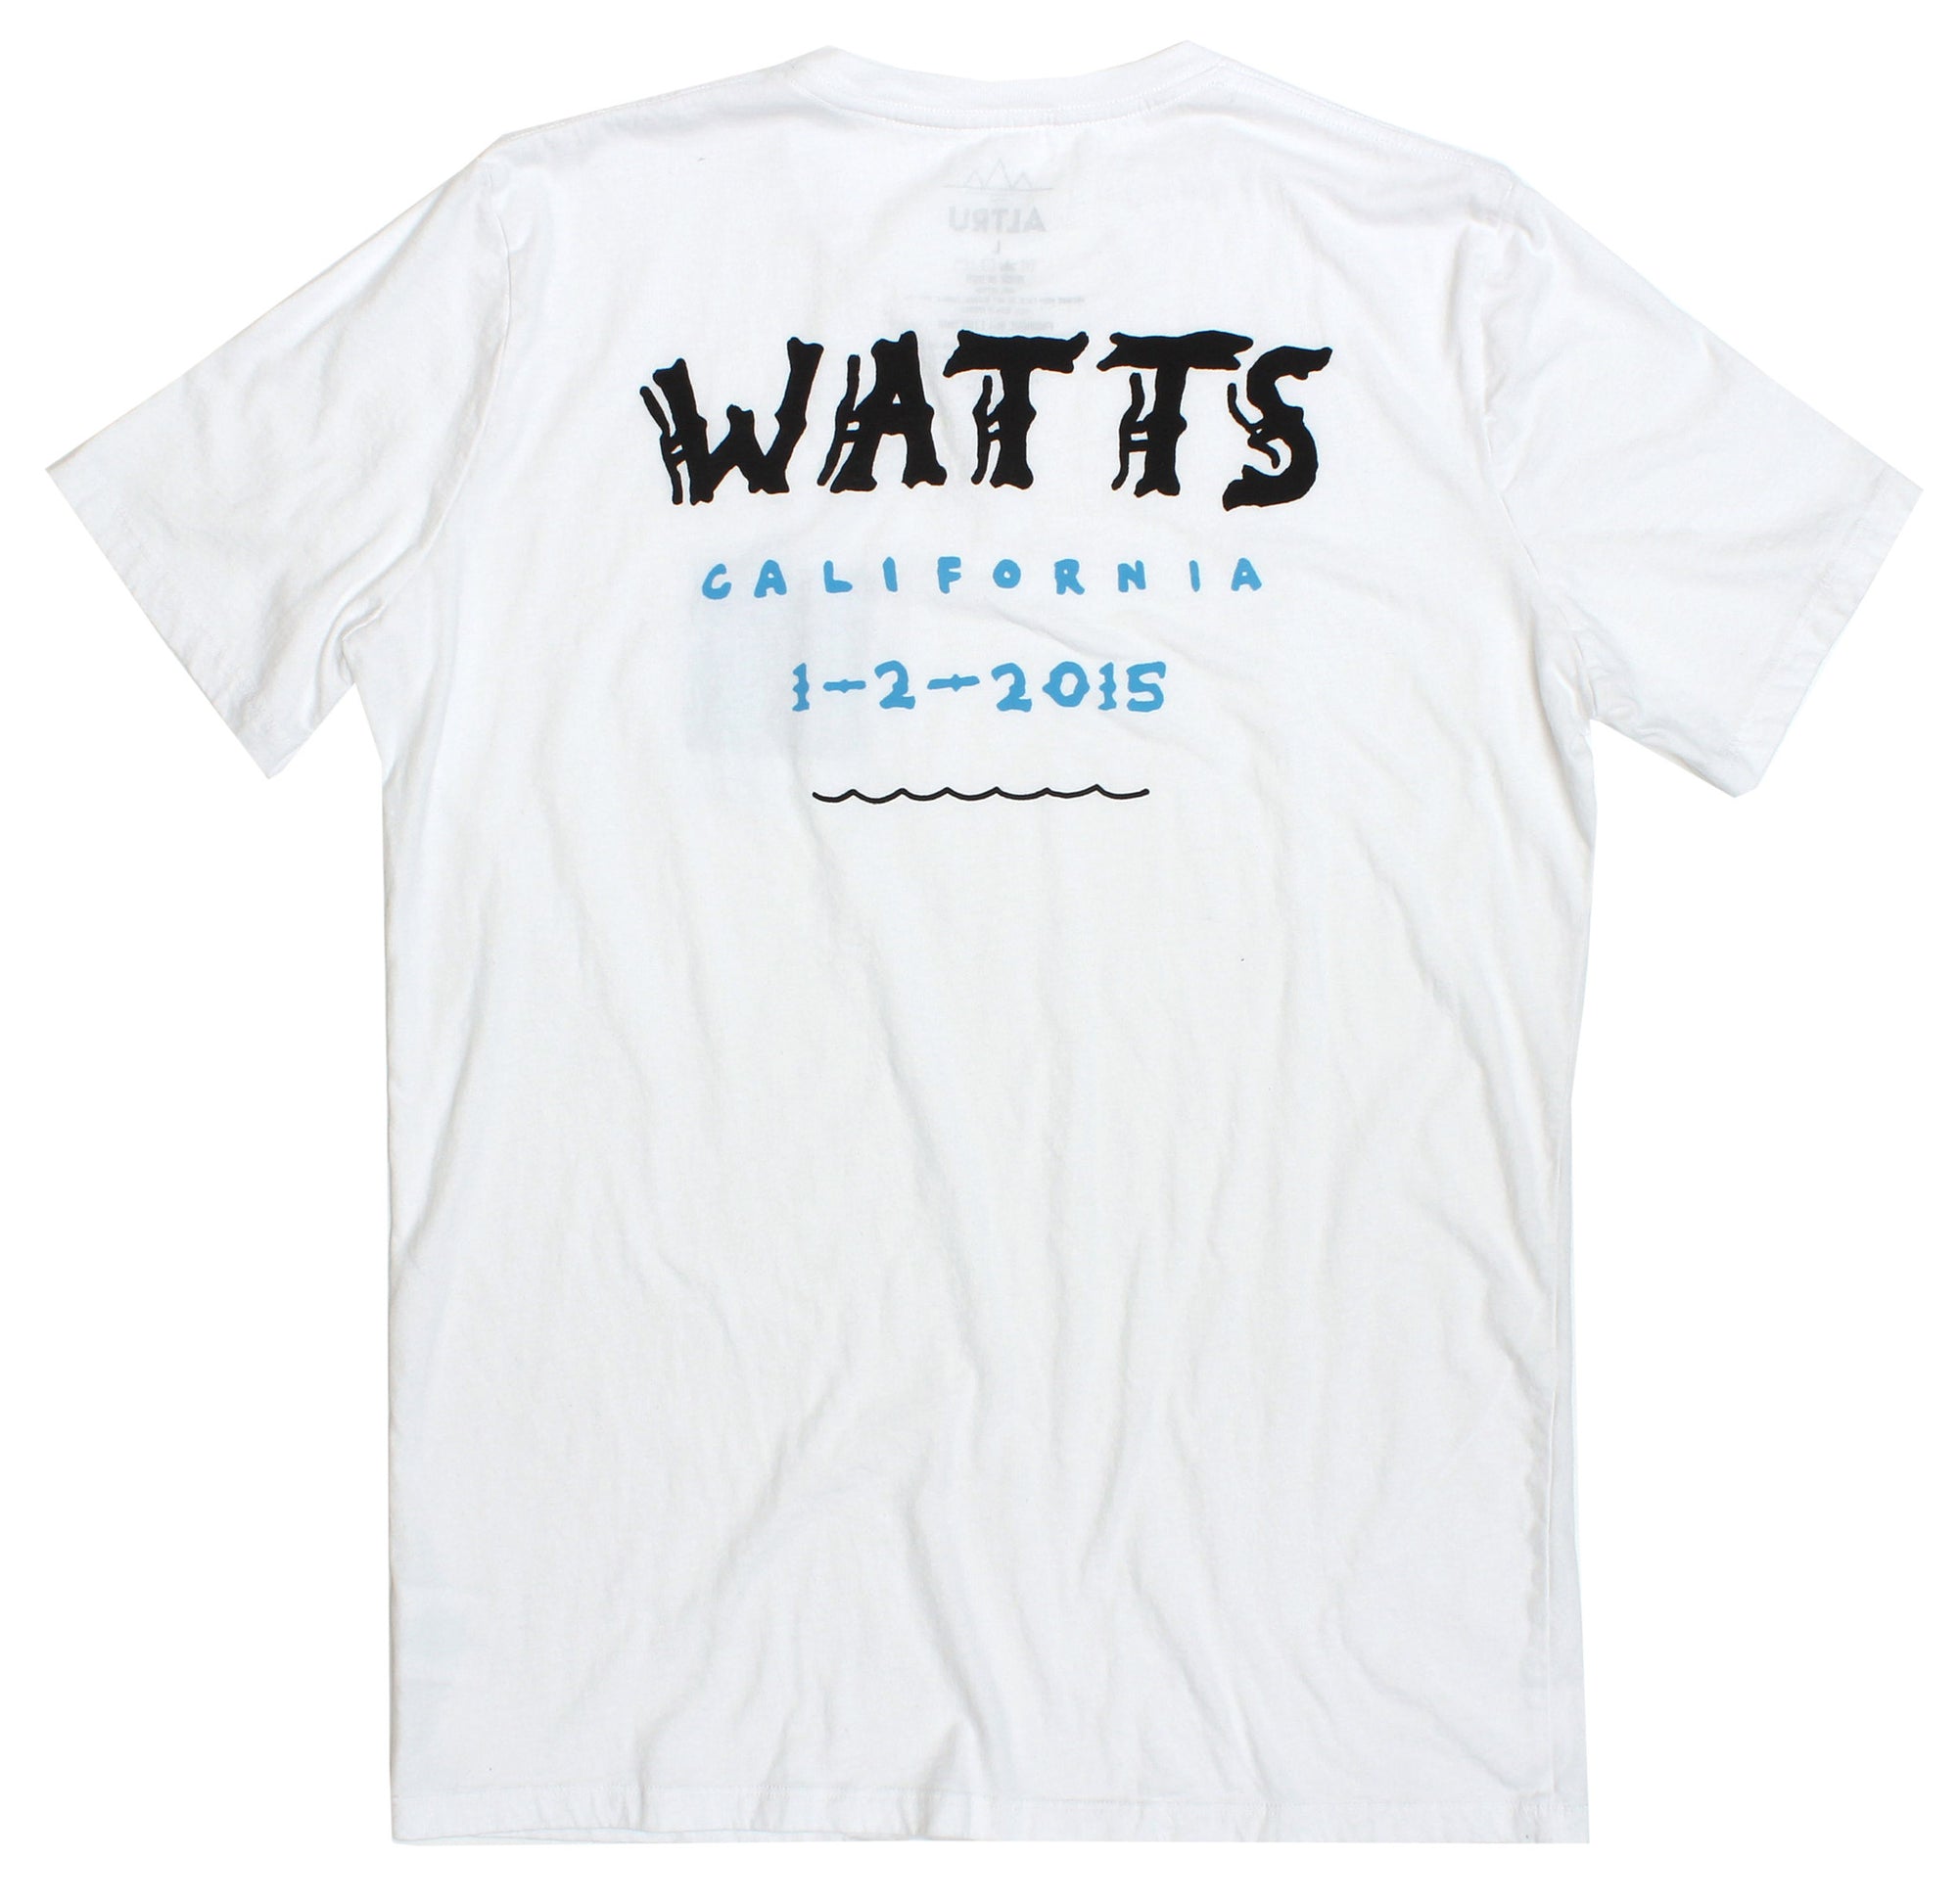 watts towers shirt front